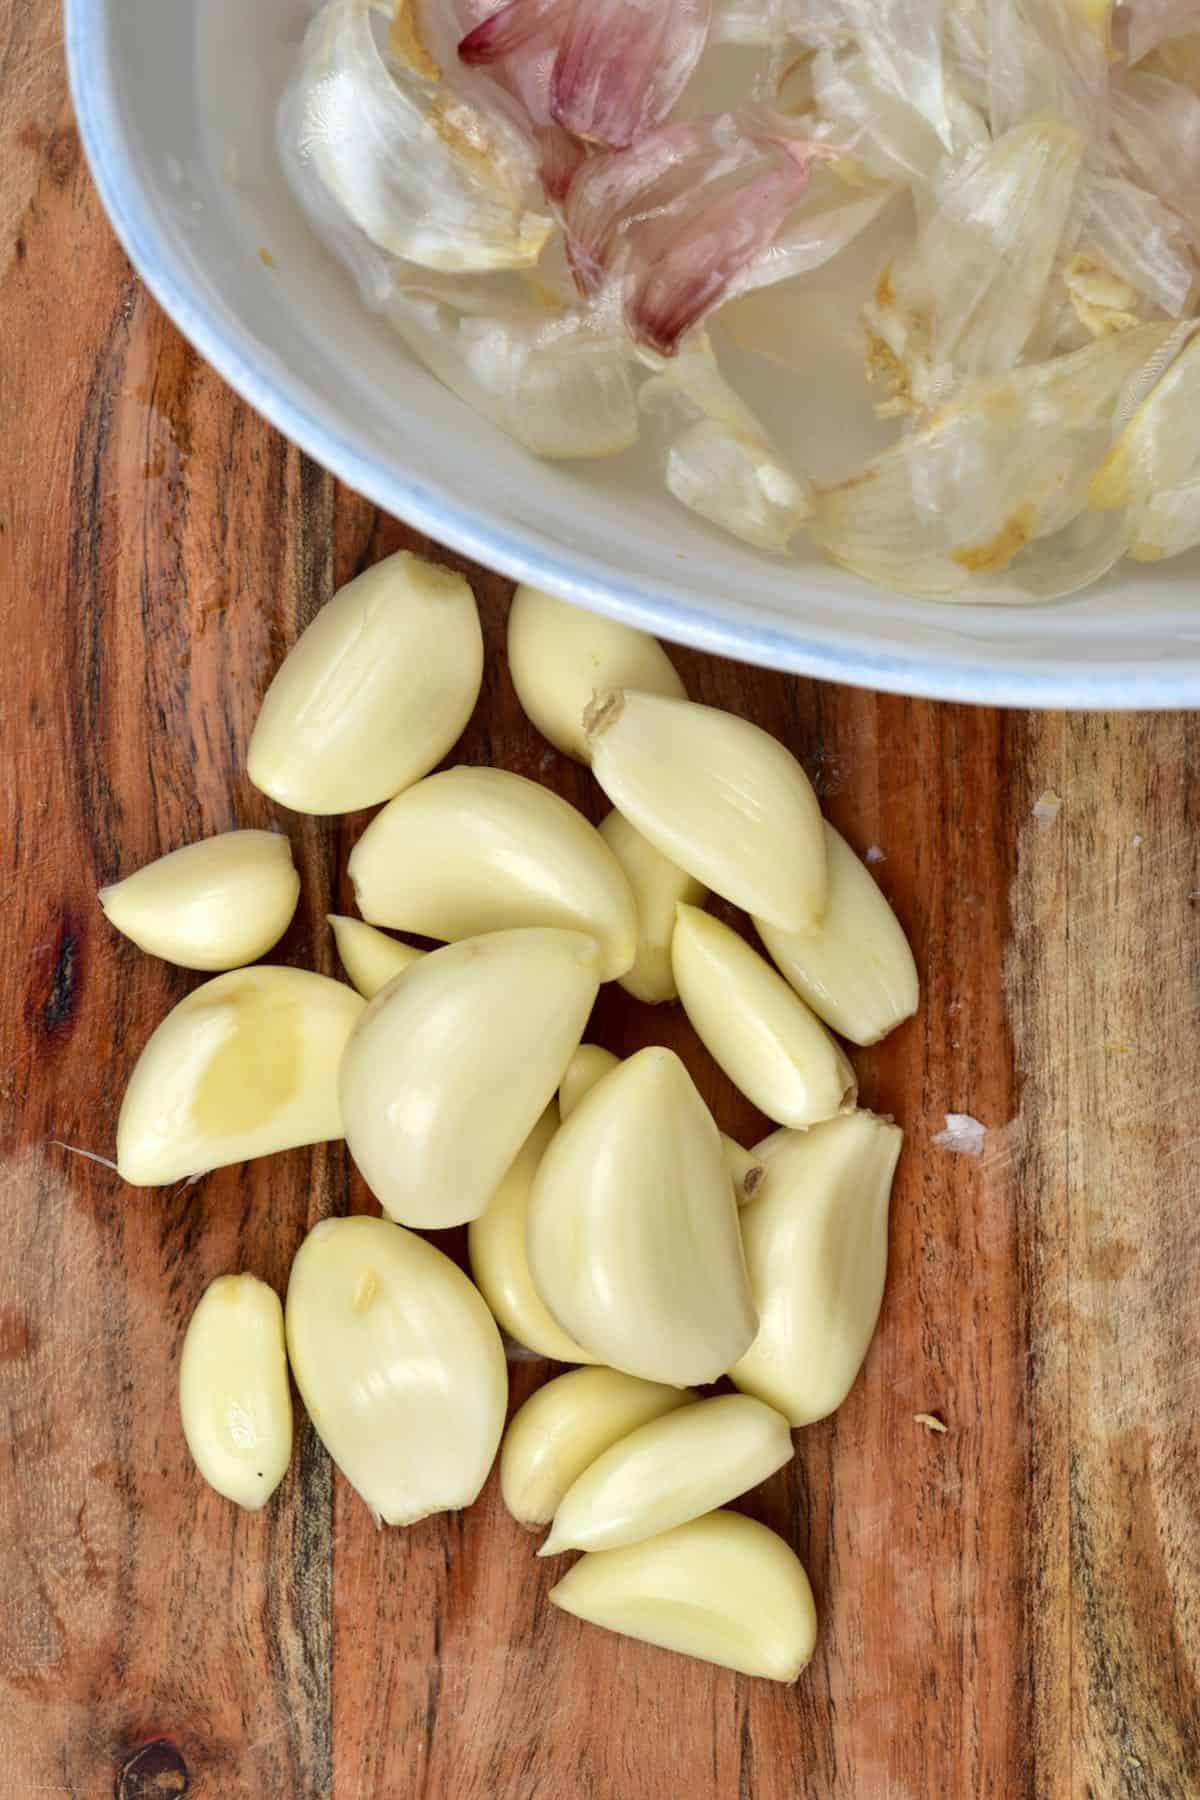 https://www.alphafoodie.com/wp-content/uploads/2021/02/How-to-easily-peel-Garlic-main2.jpeg